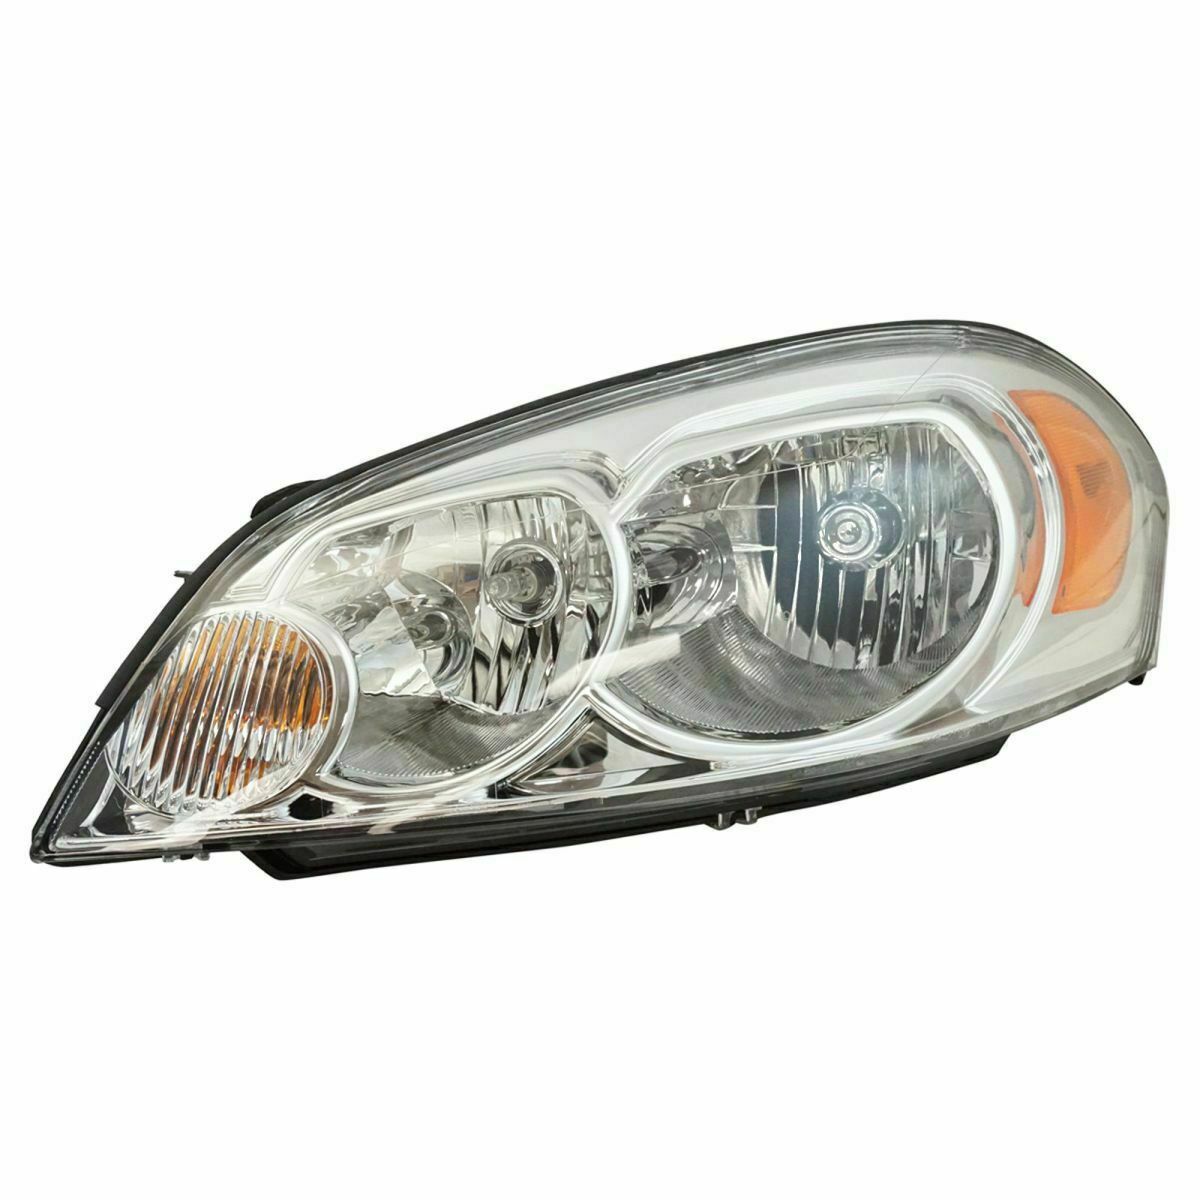 06-07 Chevy Impala ('14-'16 Ltd) & '06-'07 Monte Carlo [OE Style] Driver's Side Headlamp/Light